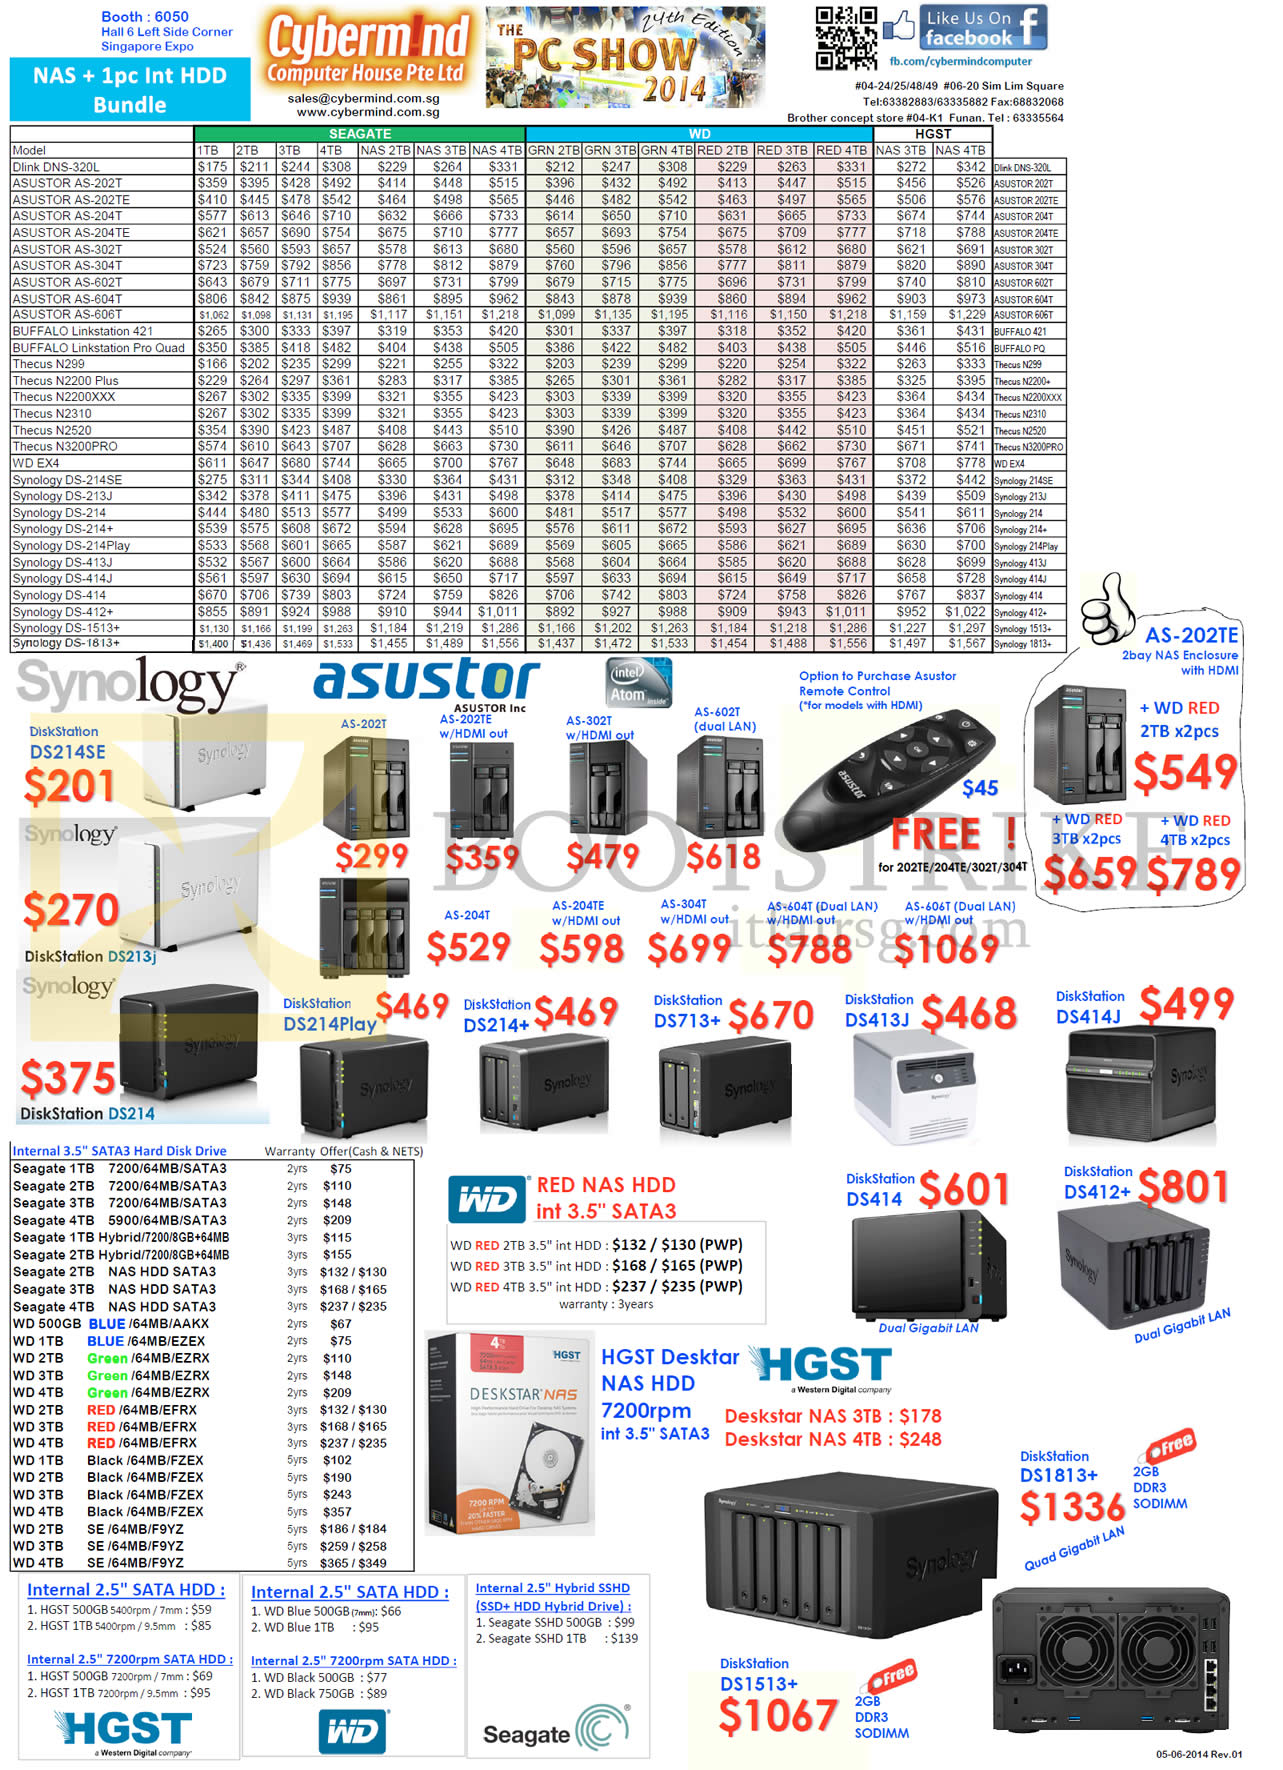 PC SHOW 2014 price list image brochure of Cybermind NAS Synology DiskStation, Seagate, Asustor, Western Digital, HGST